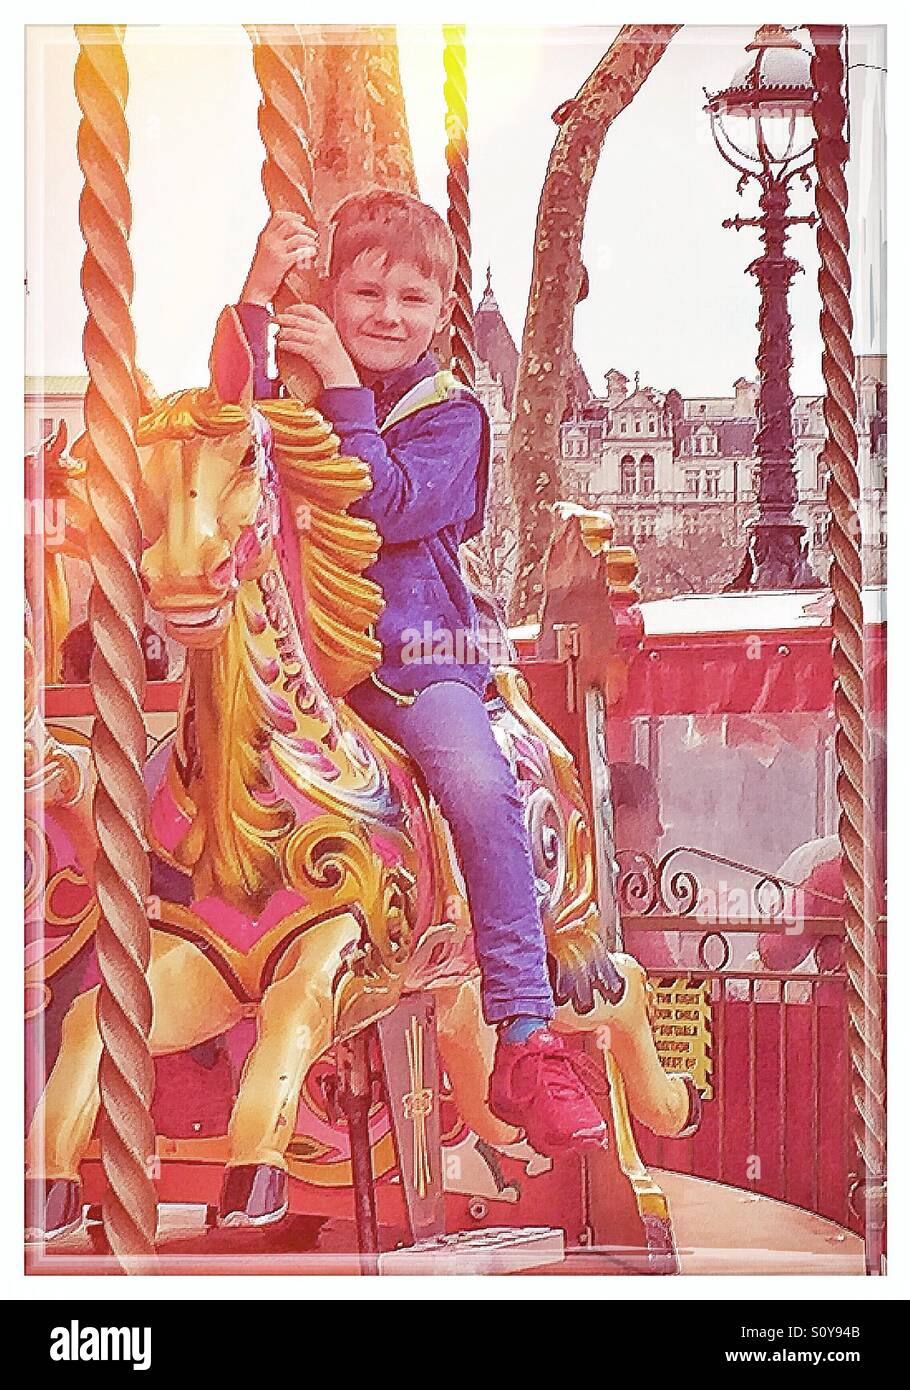 Boy on a carousel Stock Photo